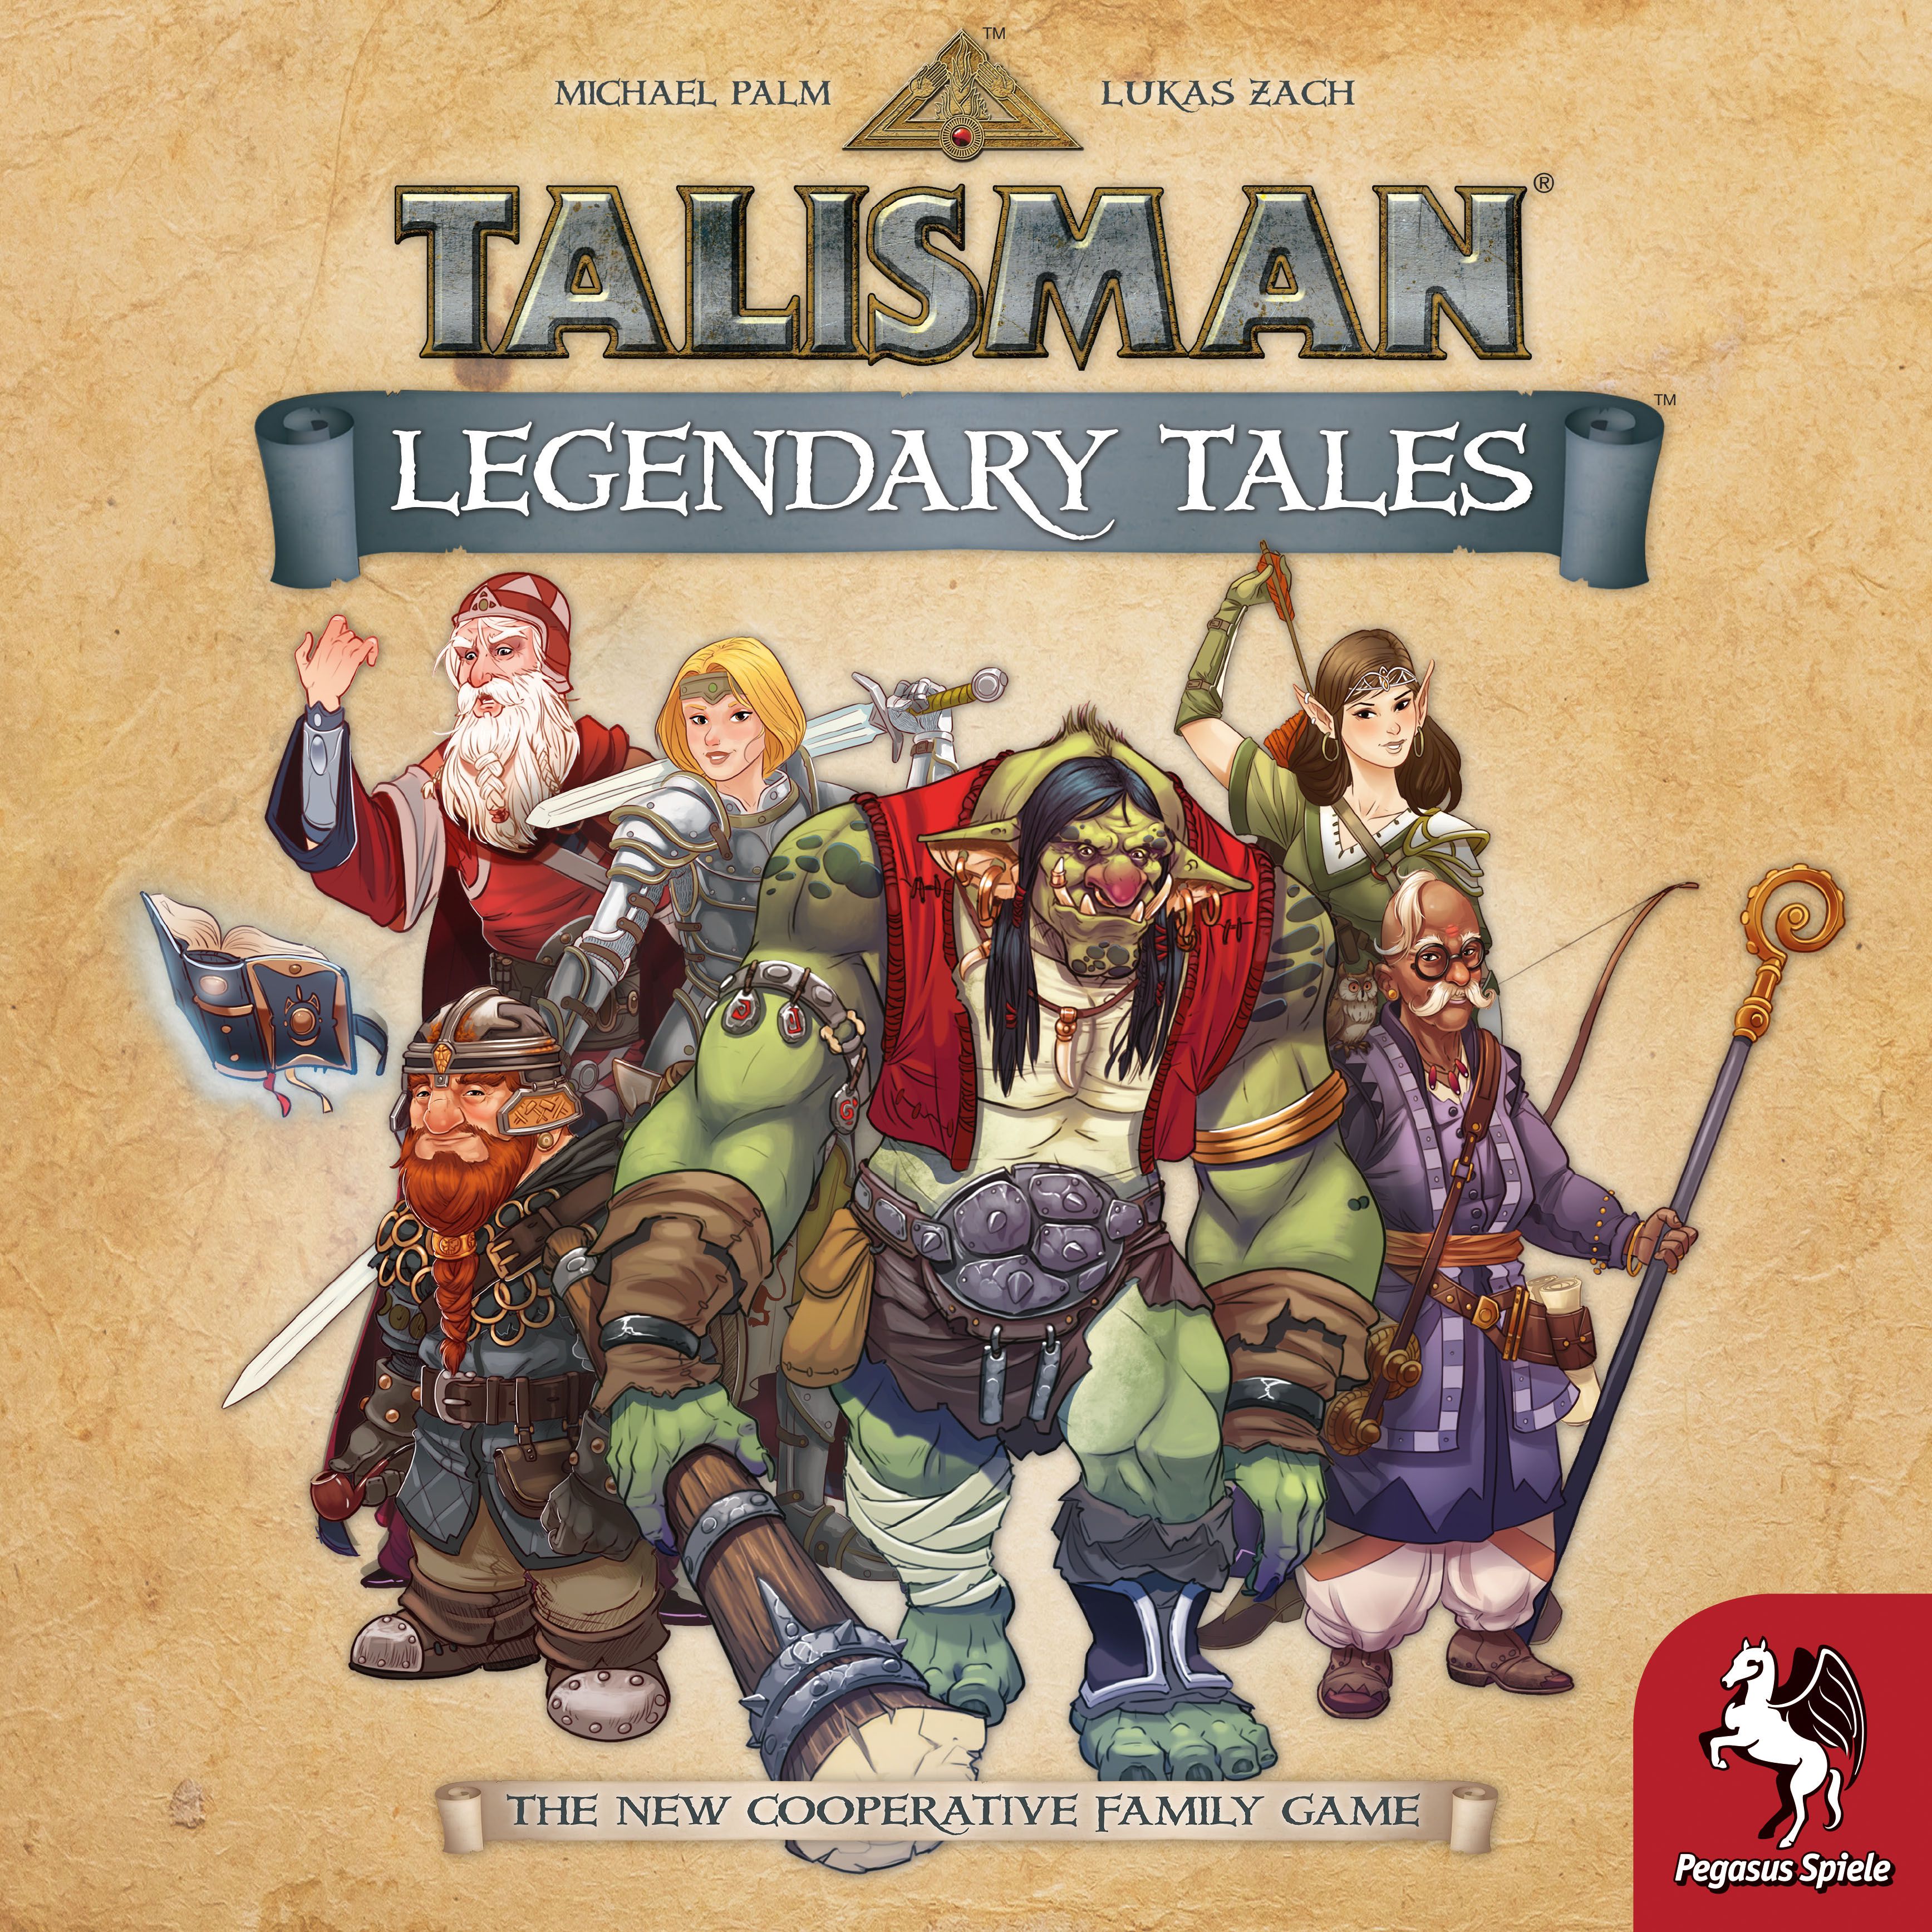 Talisman (Revised 4th Edition) | L.A. Mood Comics and Games